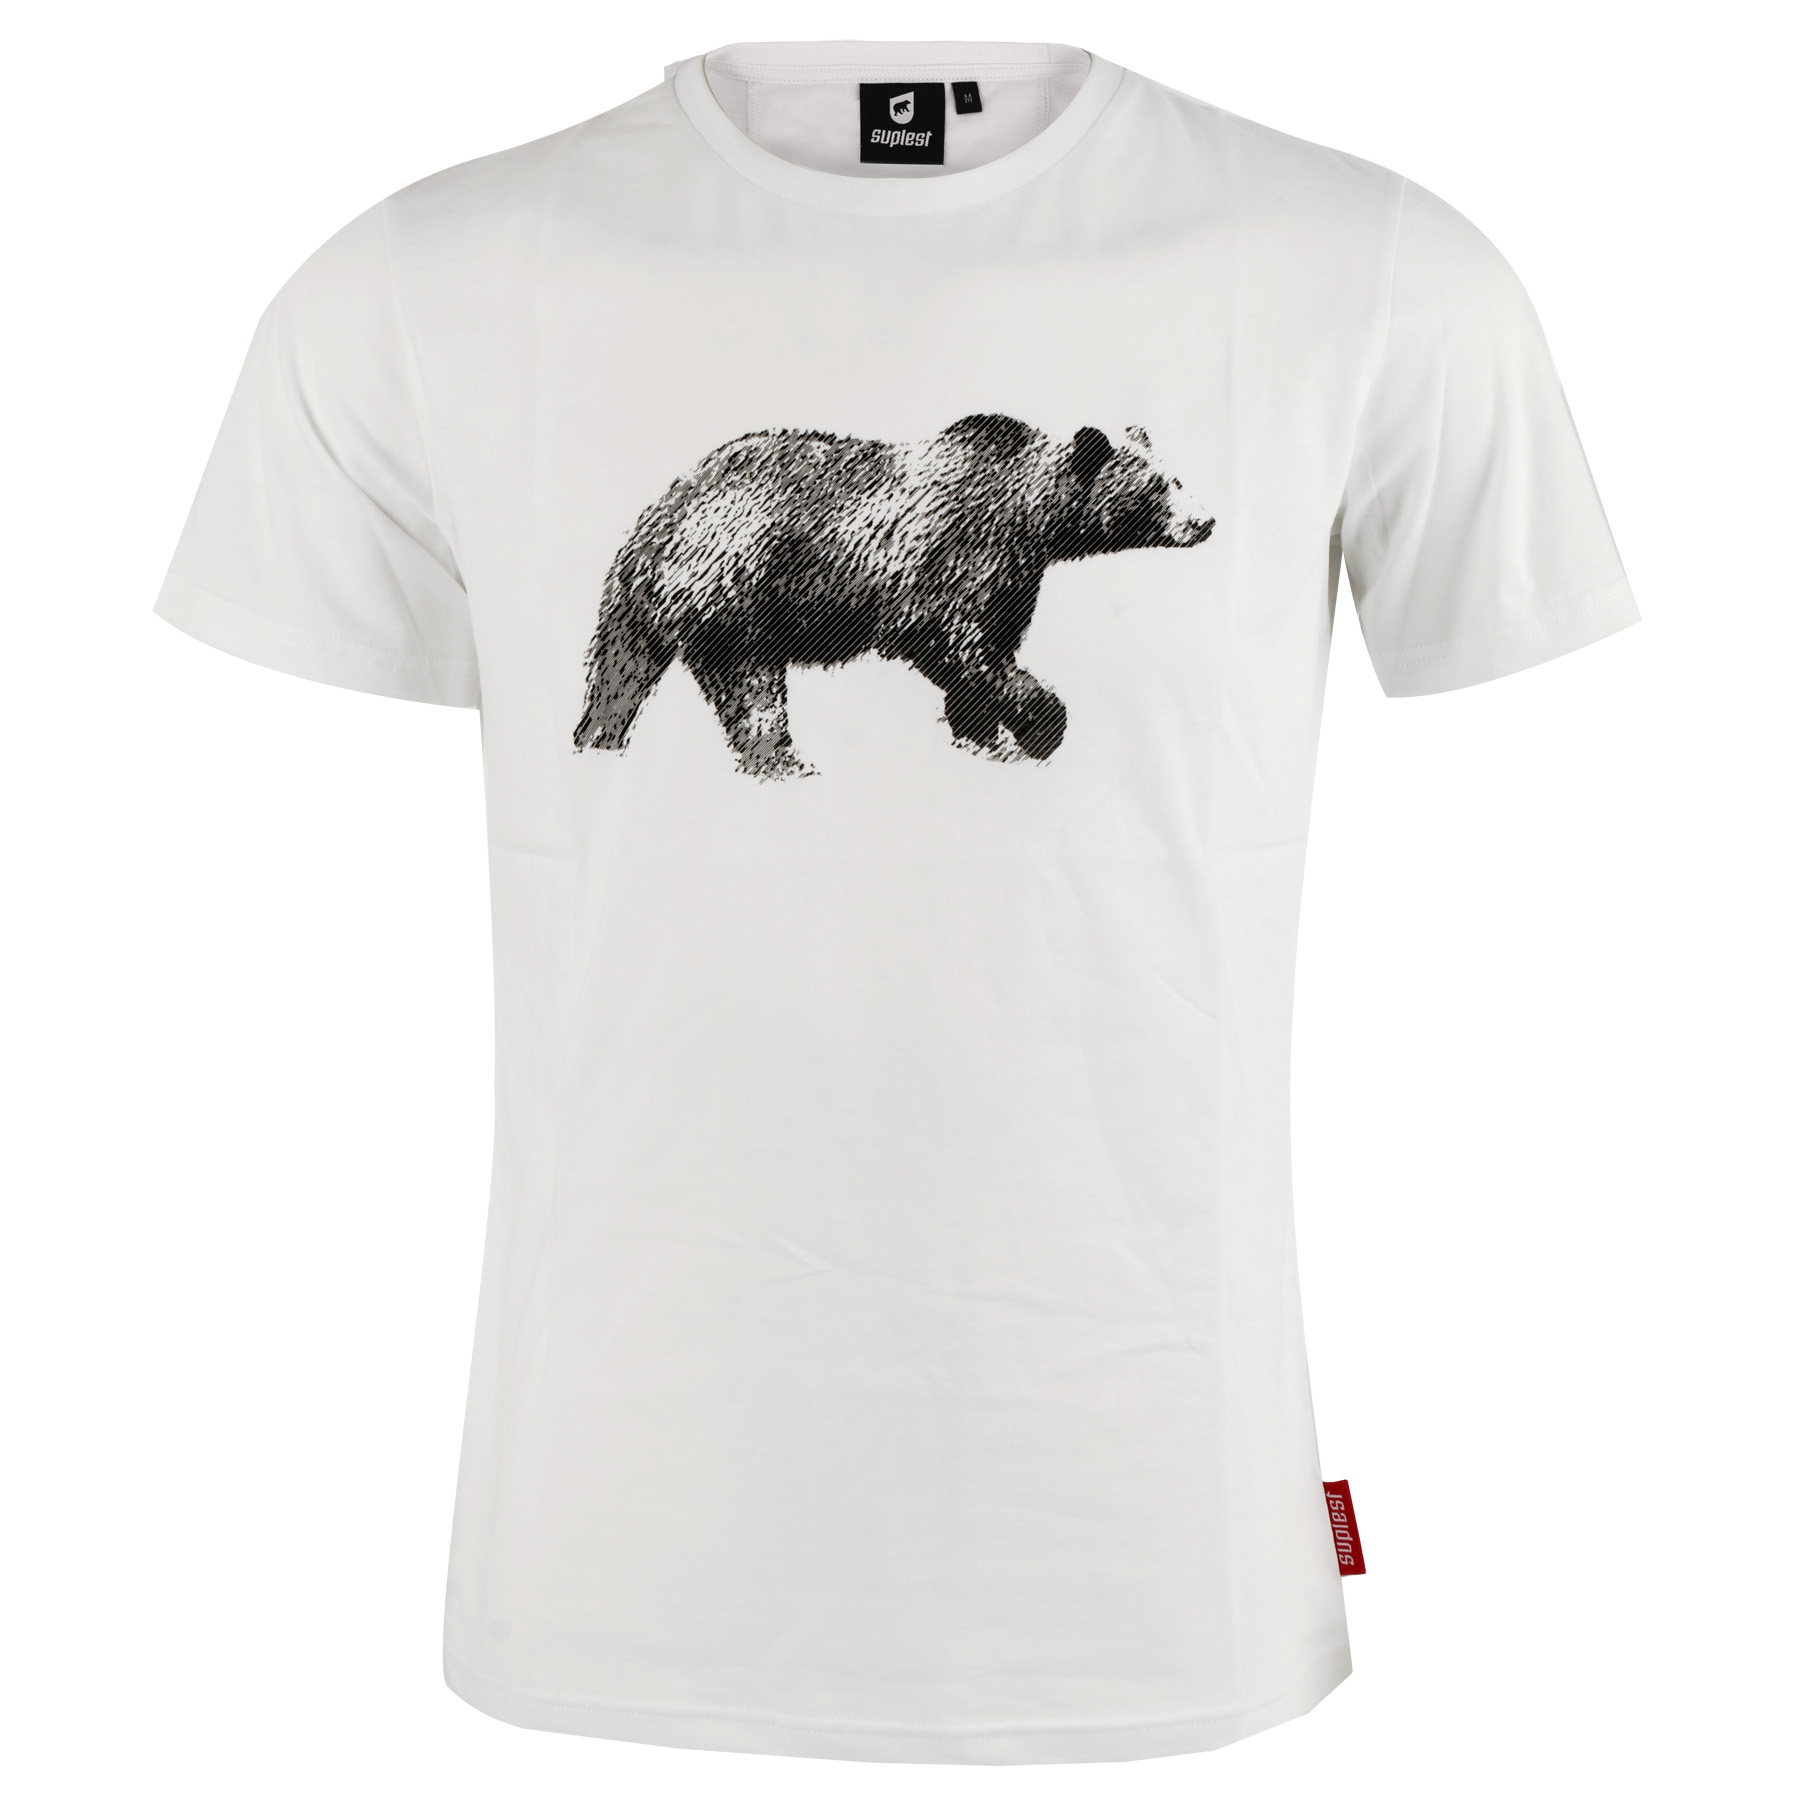 Productfoto van Suplest Bear T-Shirt - white 05.055.